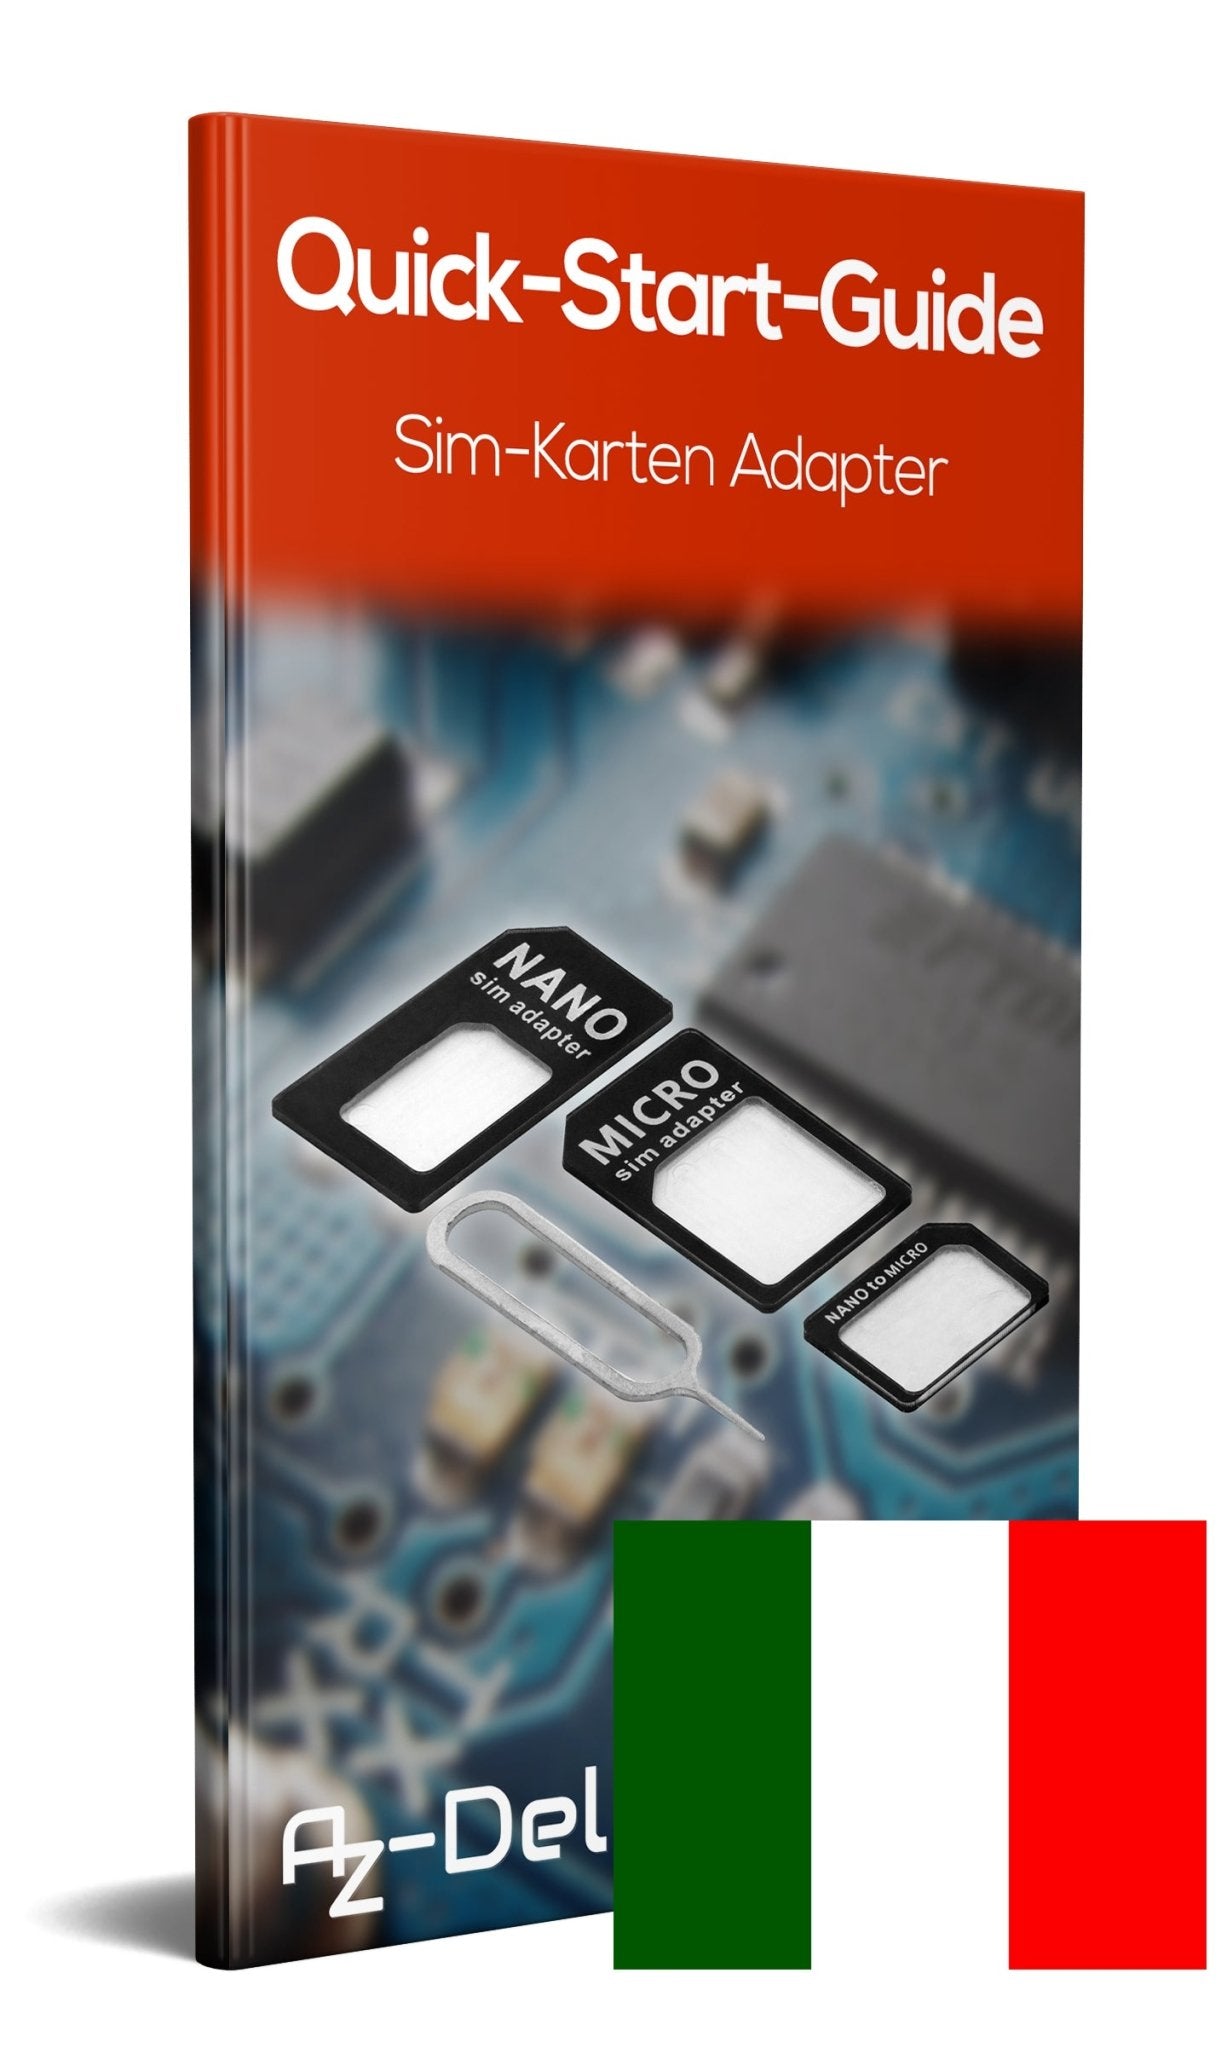 Sim-Karten Adapter - AZ-Delivery